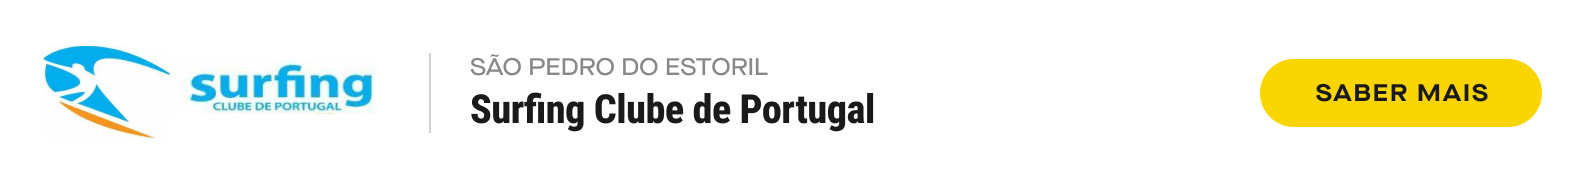 59.Desktop Surfing Clube De Portugal Sao Pedro Do Estoril